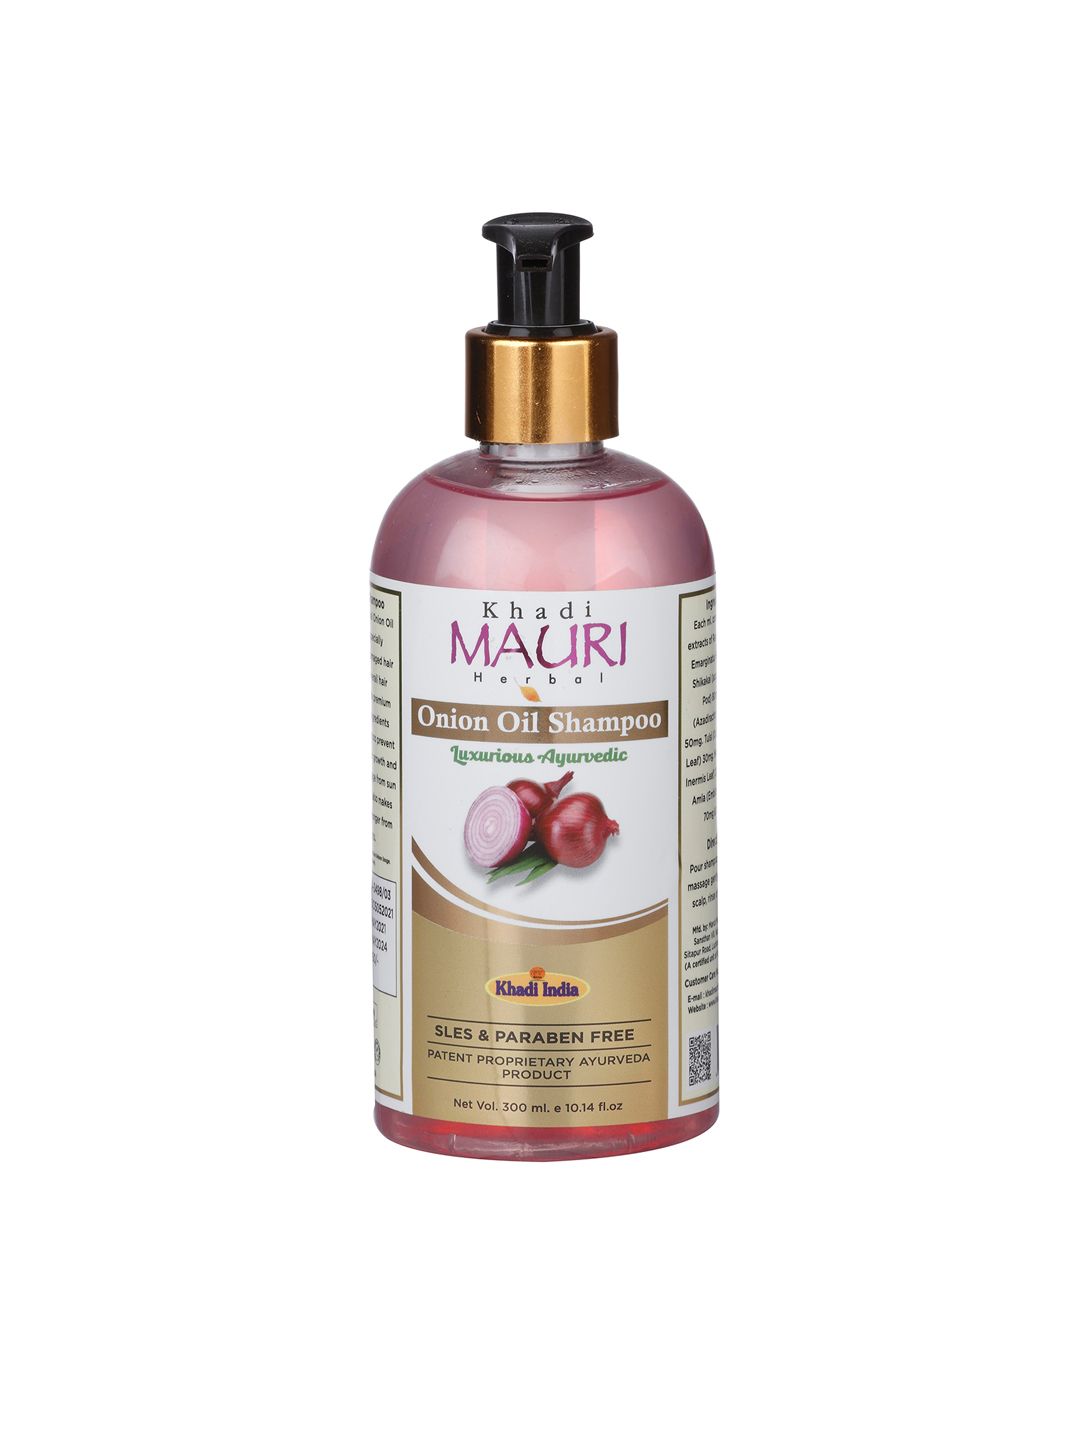 Khadi Mauri Herbal Onion Oil Shampoo - 300 ml Price in India